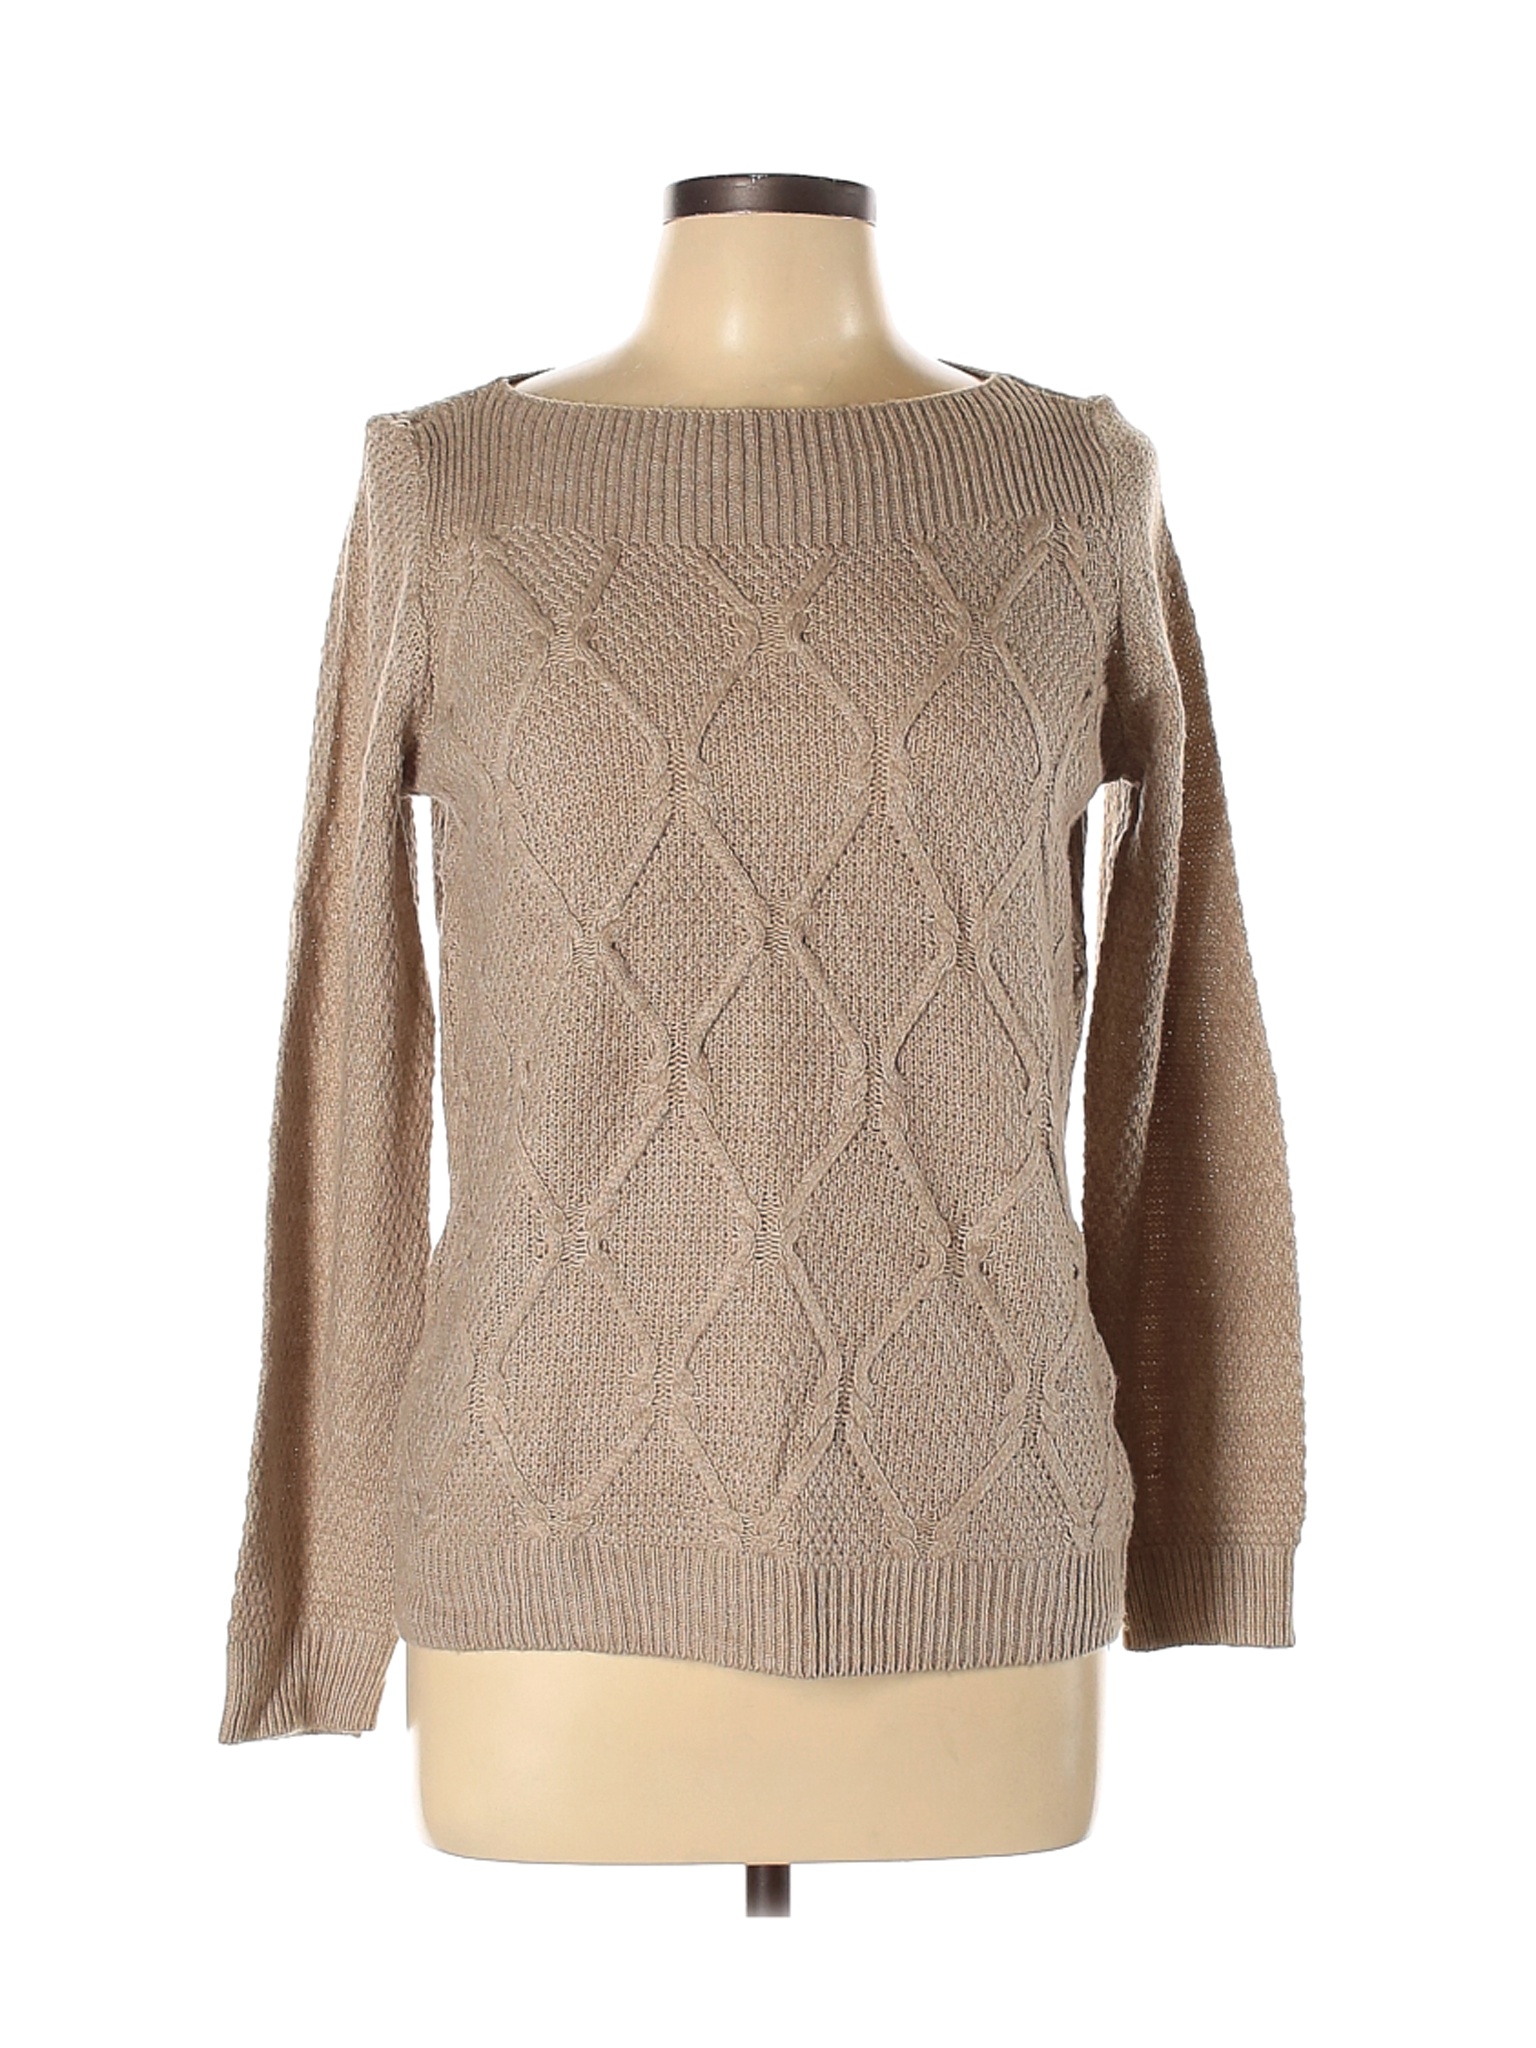 89th & Madison Women Brown Pullover Sweater L | eBay